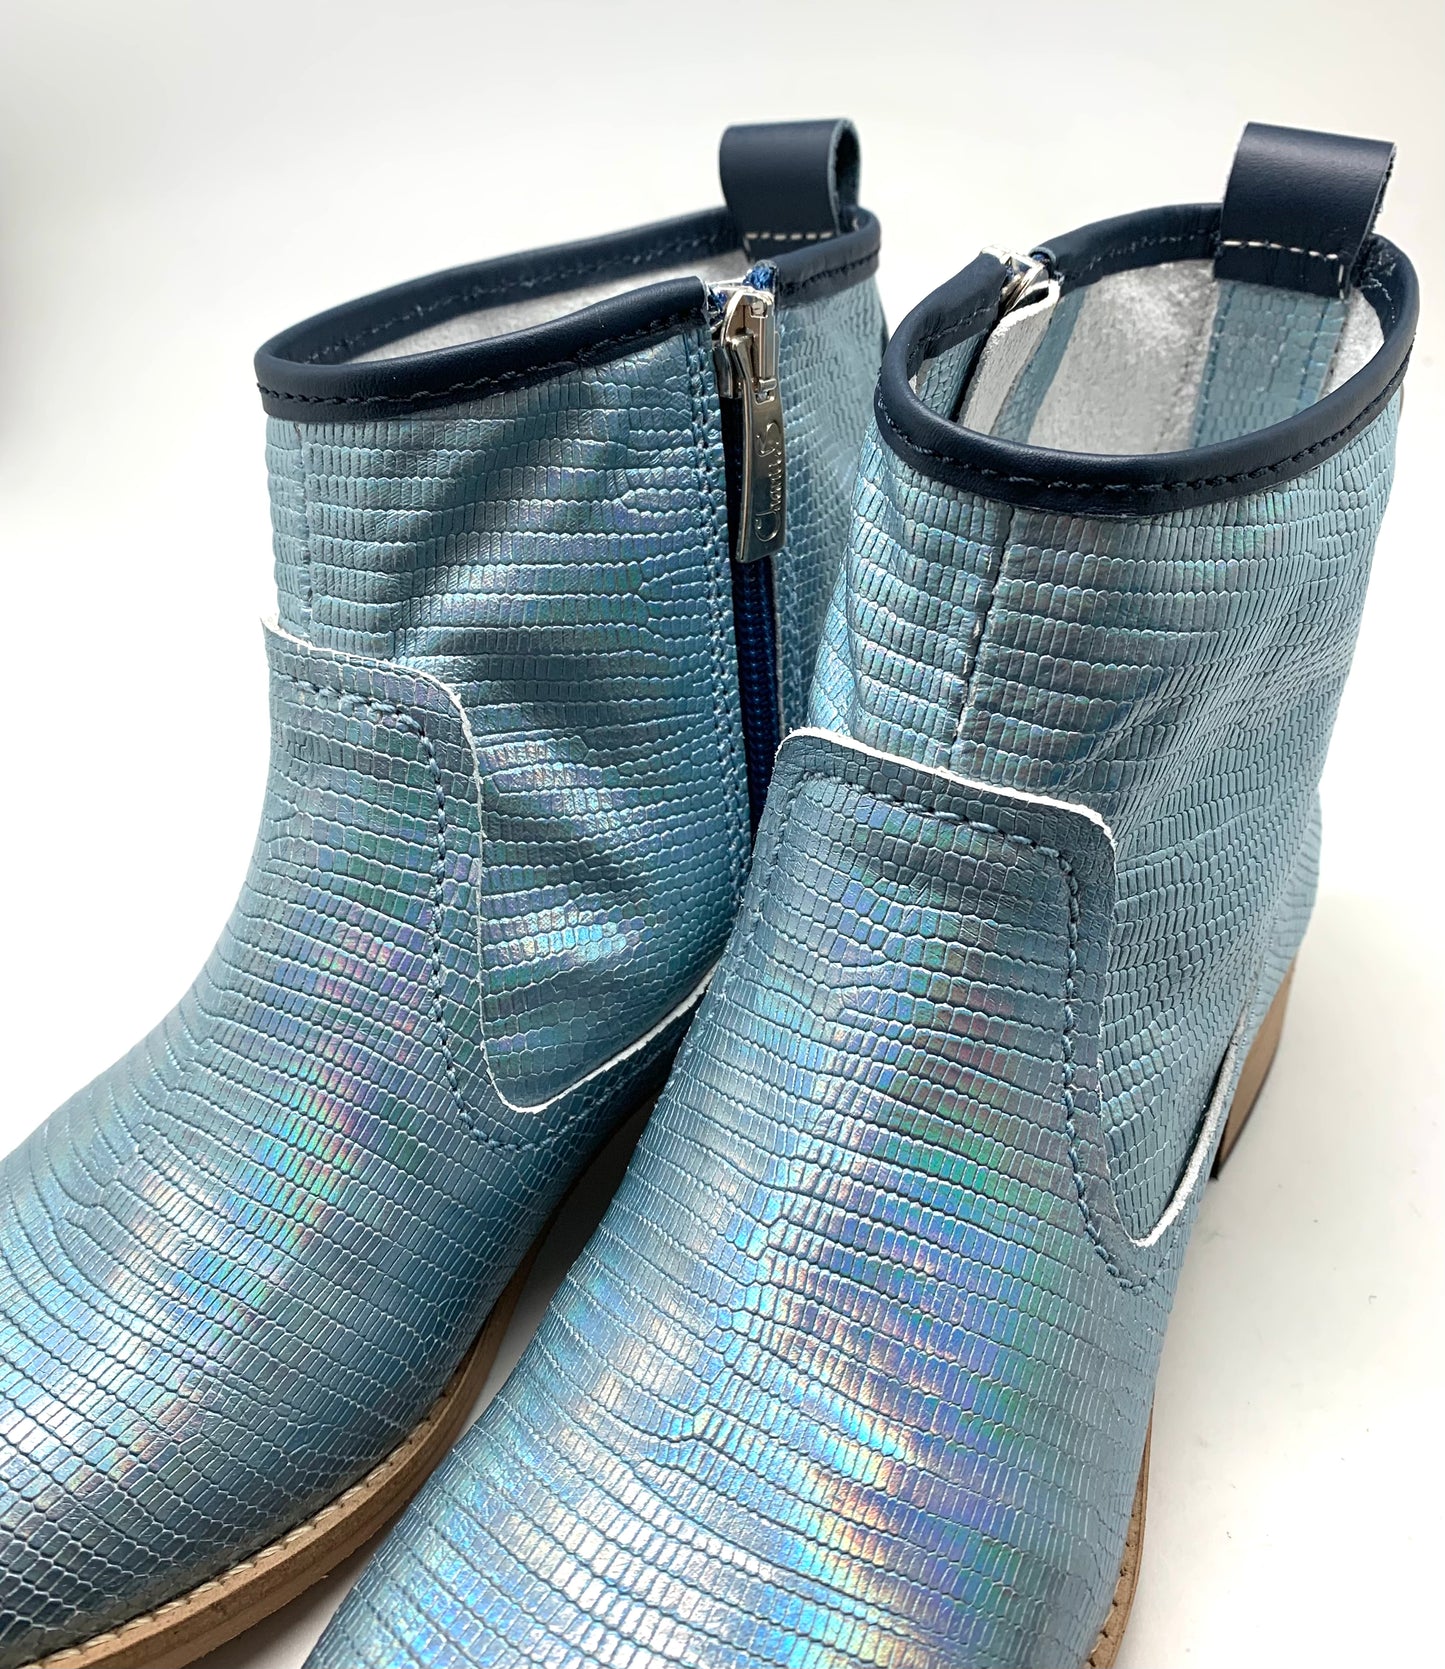 A pair of Designer Boots named Zipp - Ice Blue Iridescent